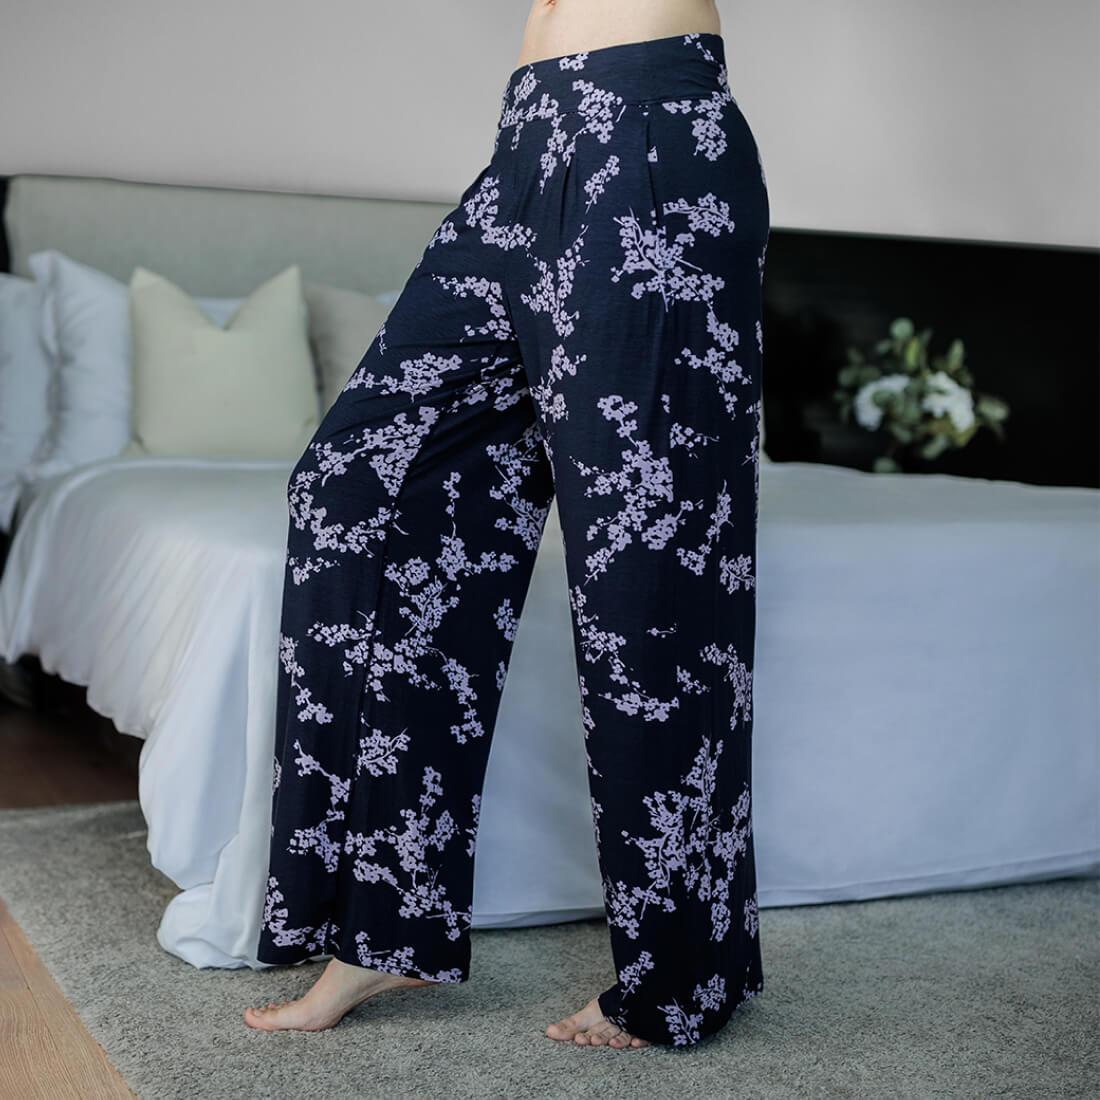 Women's Restorative Sleepwear Sleep Shorts